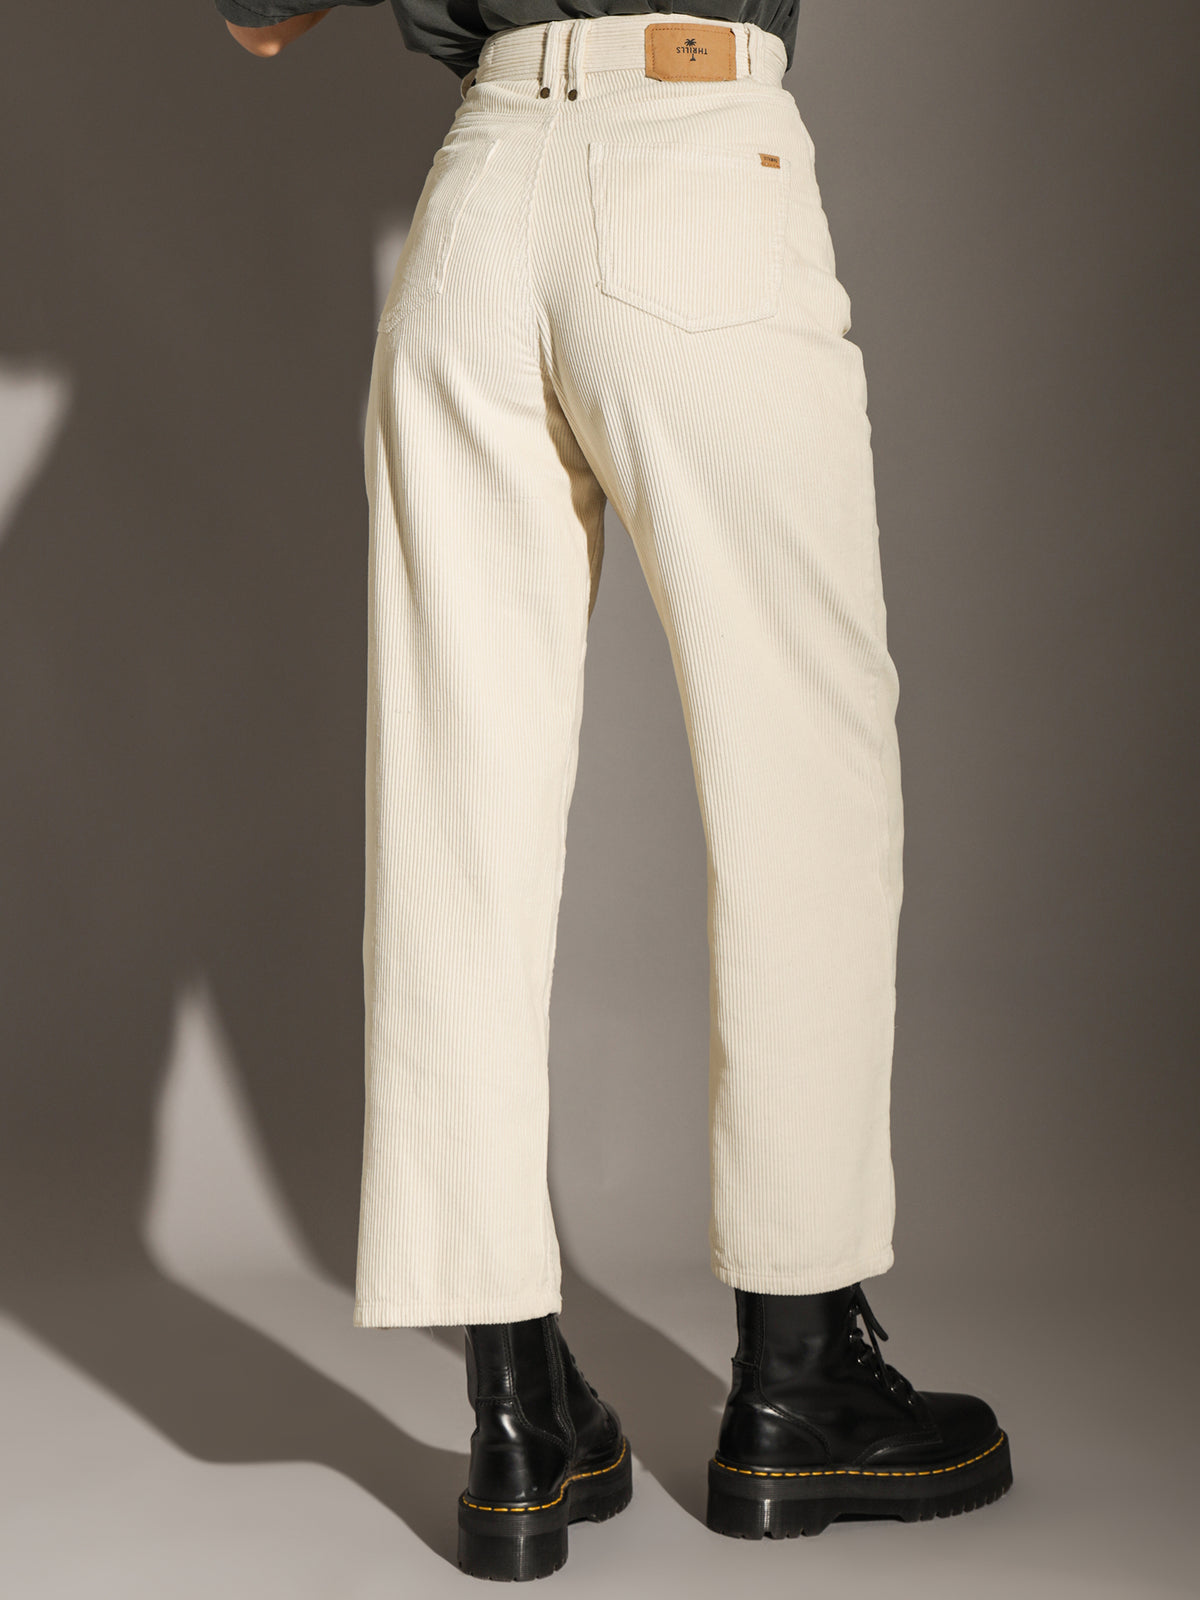 Billie Jean Cord Pants in Heritage White